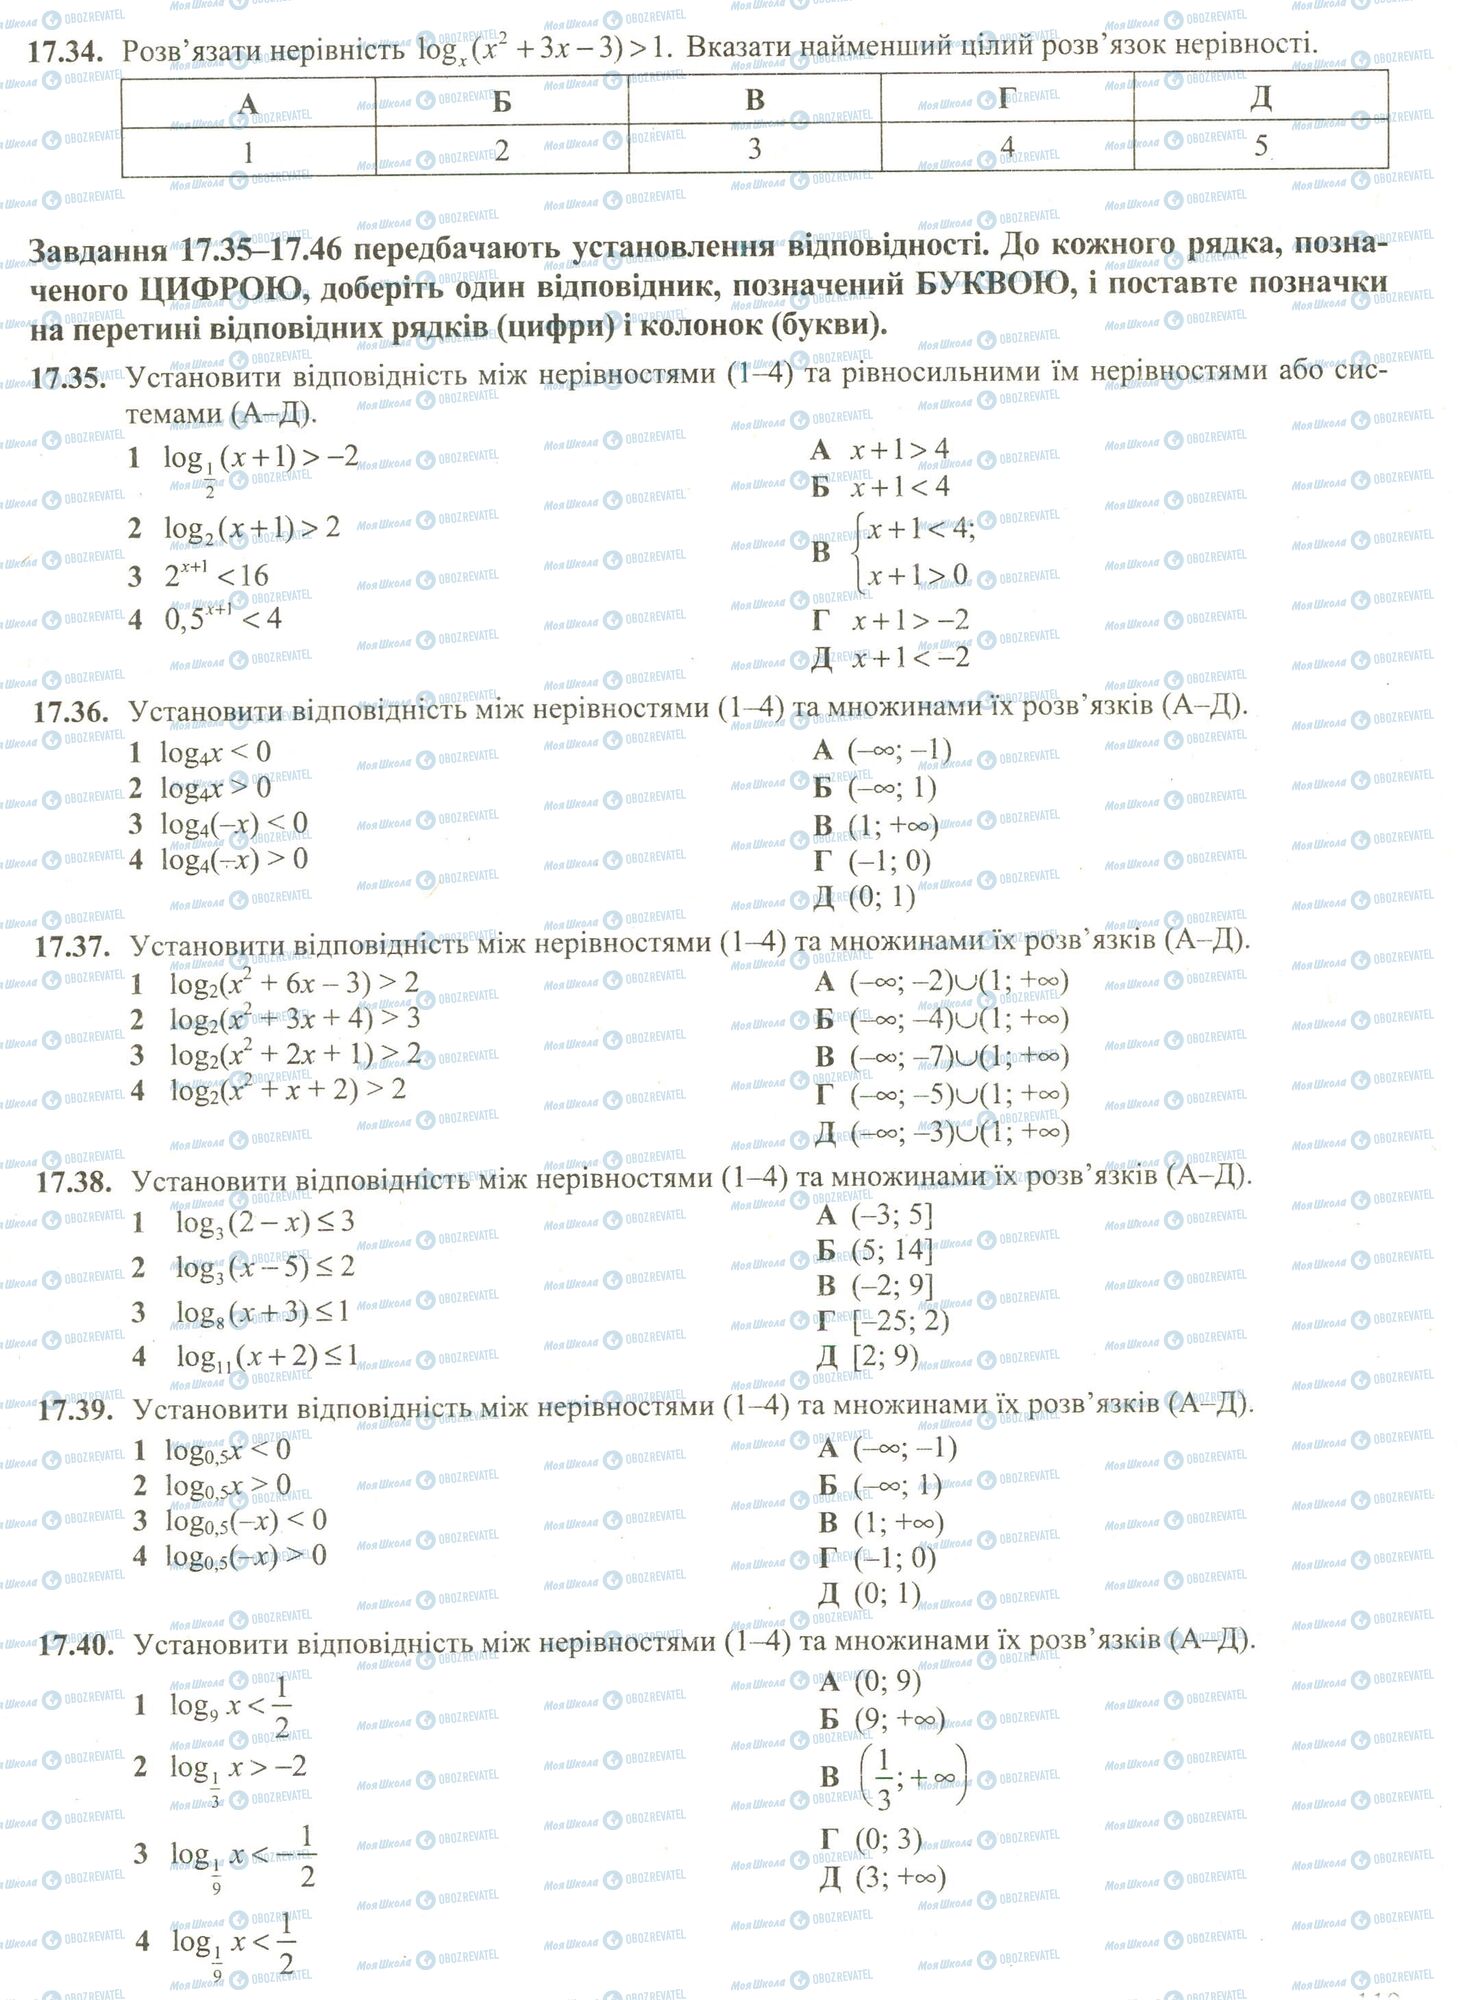 ЗНО Математика 11 класс страница 34-40